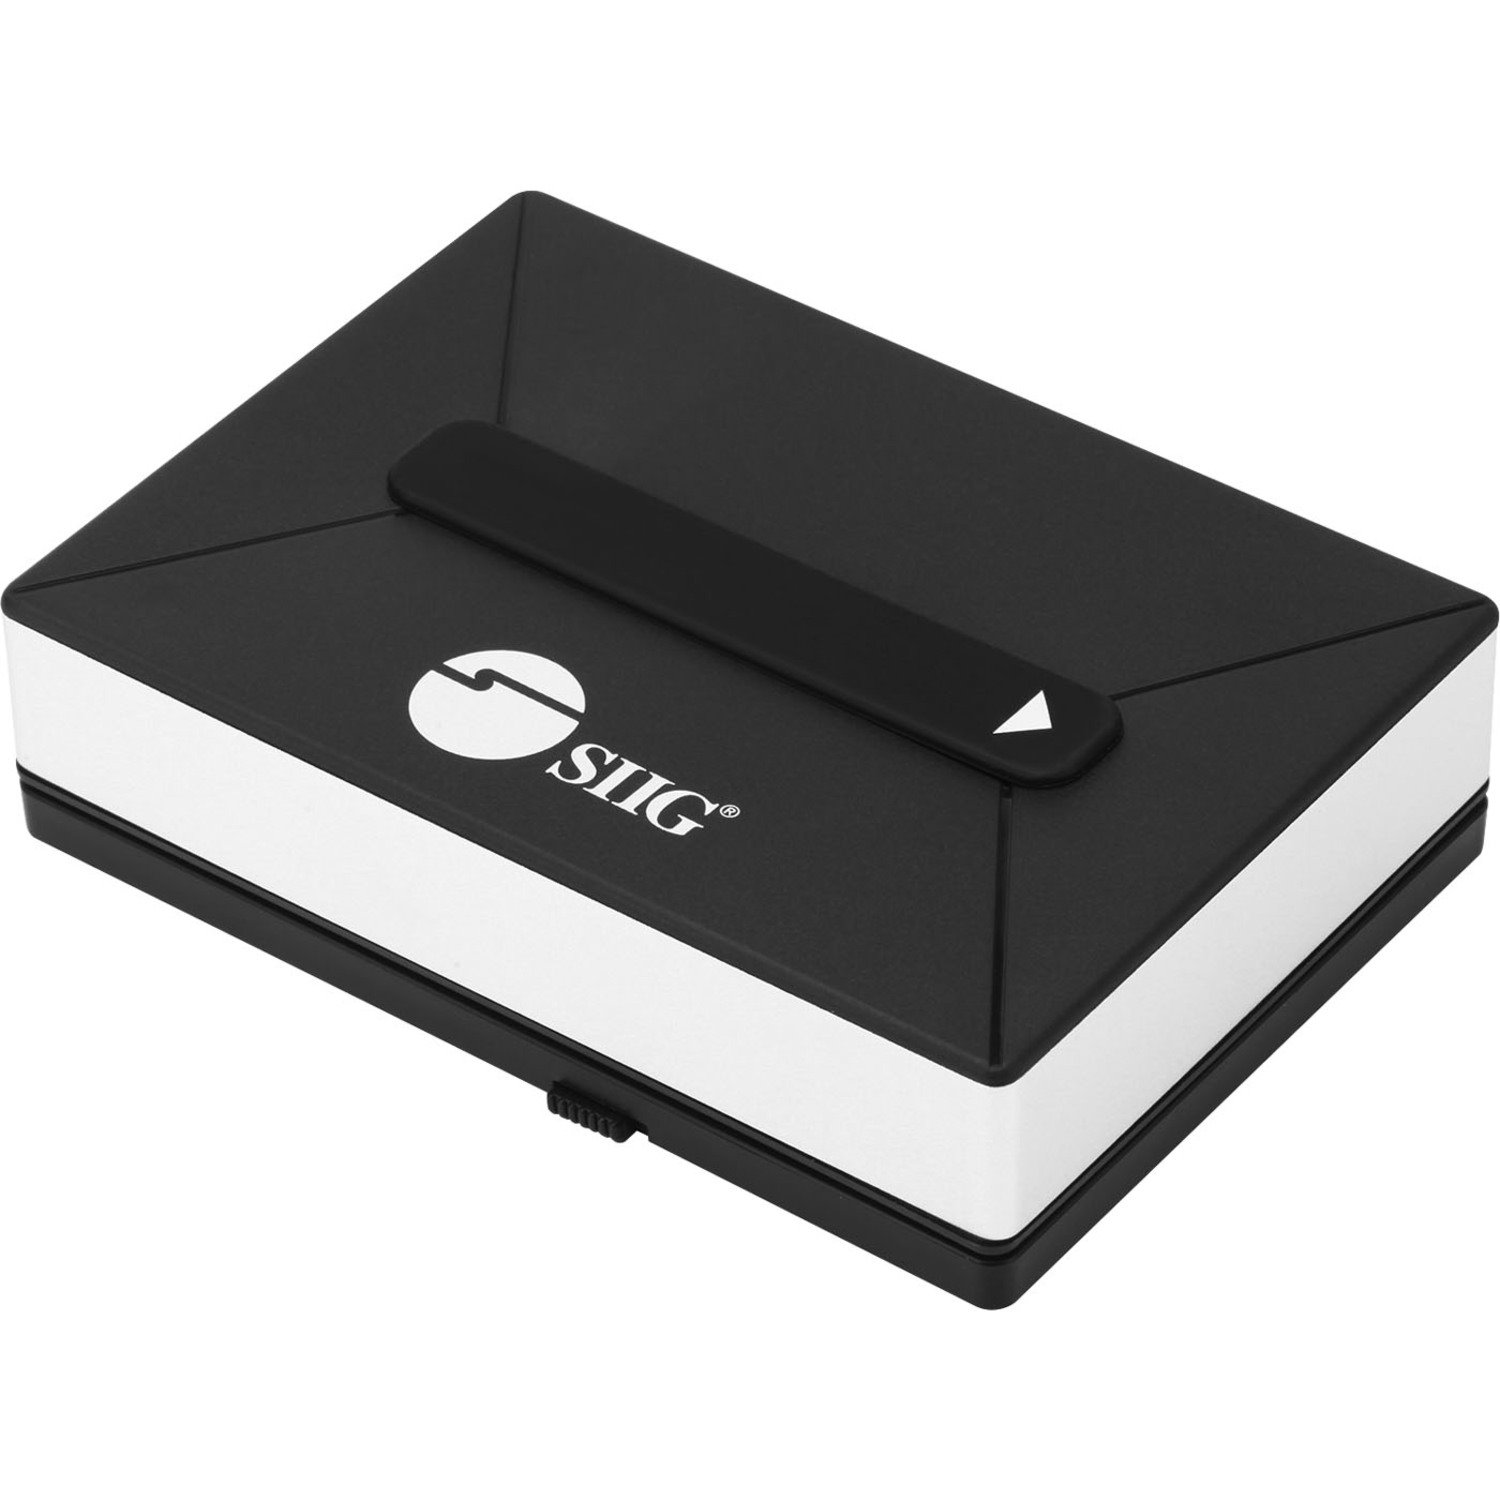 SIIG Drive Dock - USB 3.0 Host Interface - UASP Support External - Black